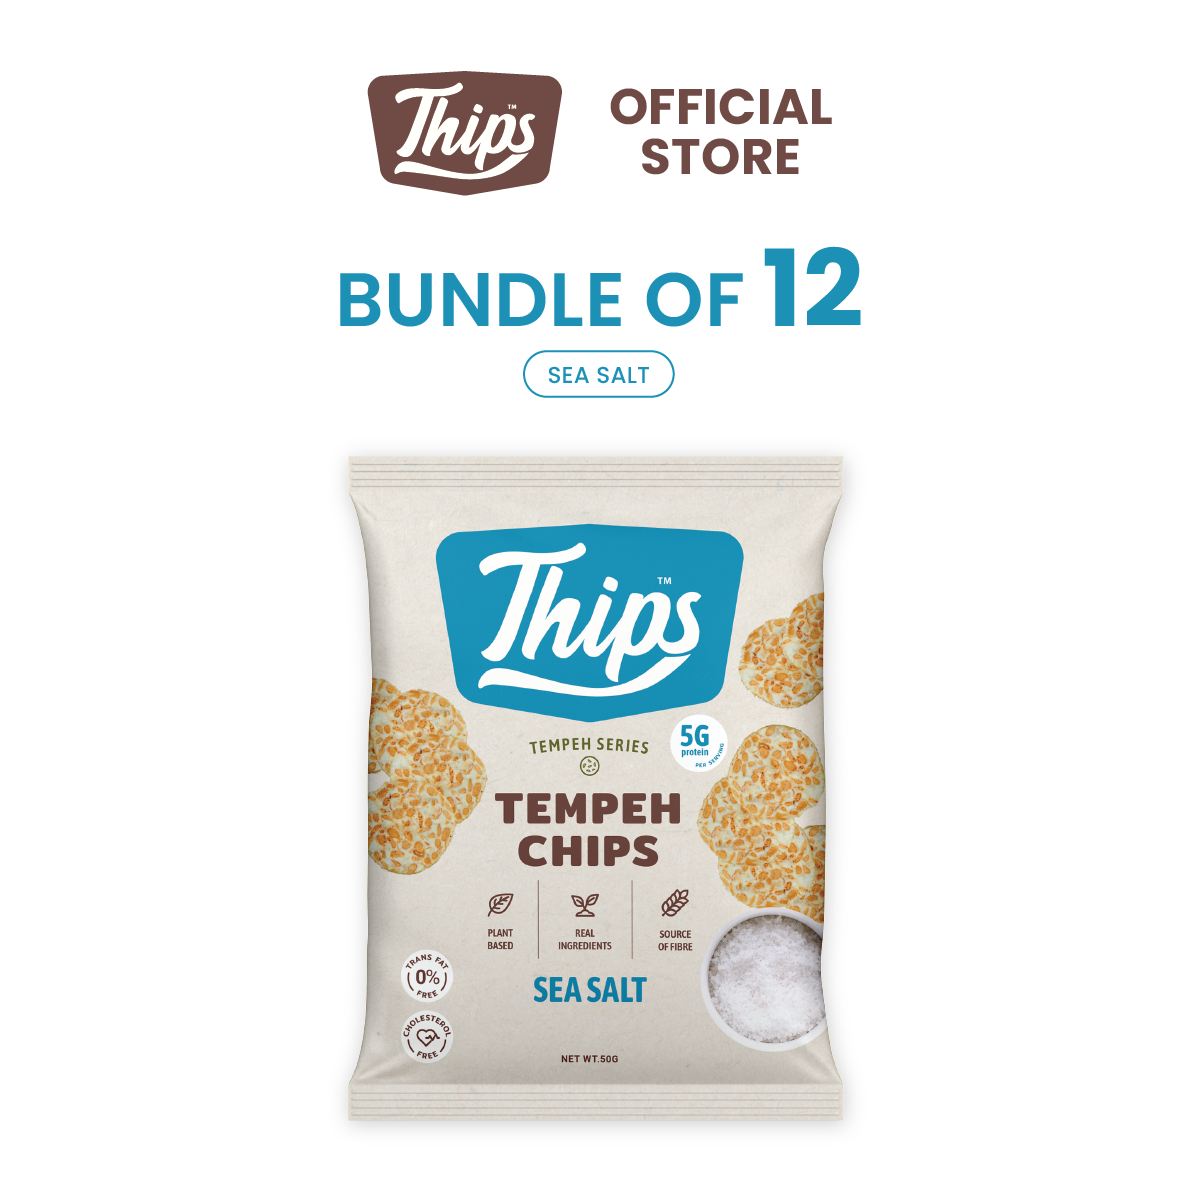 [Subscription Plan- Bundle of 12] Thips Sea Salt Tempeh Chips